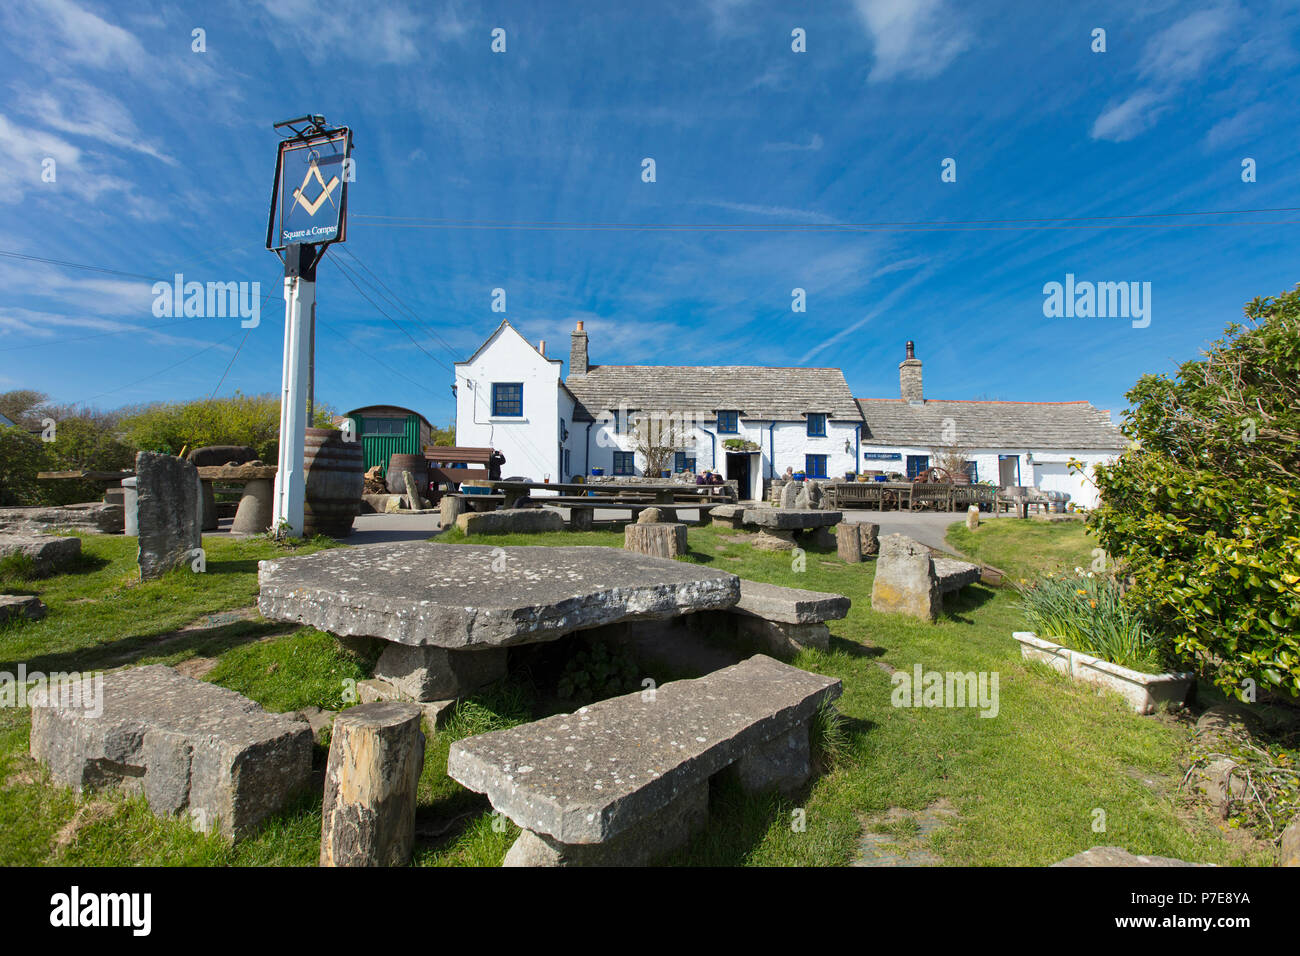 Berühmte Platz und Kompass Pub in Worth Matravers, Dorset, Großbritannien - 30 April 2018 Stockfoto